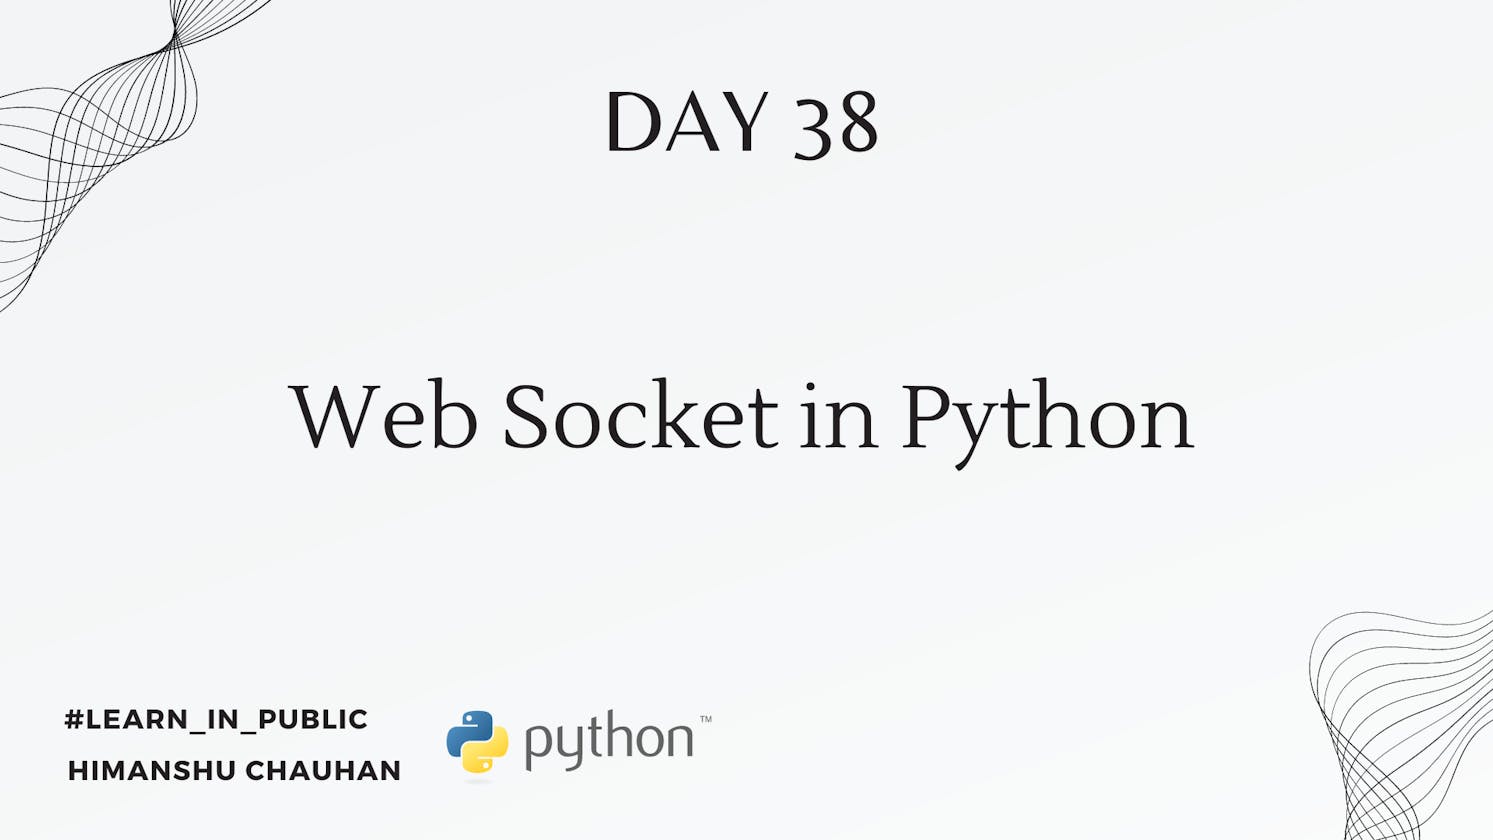 Day 38: Web Socket in Python